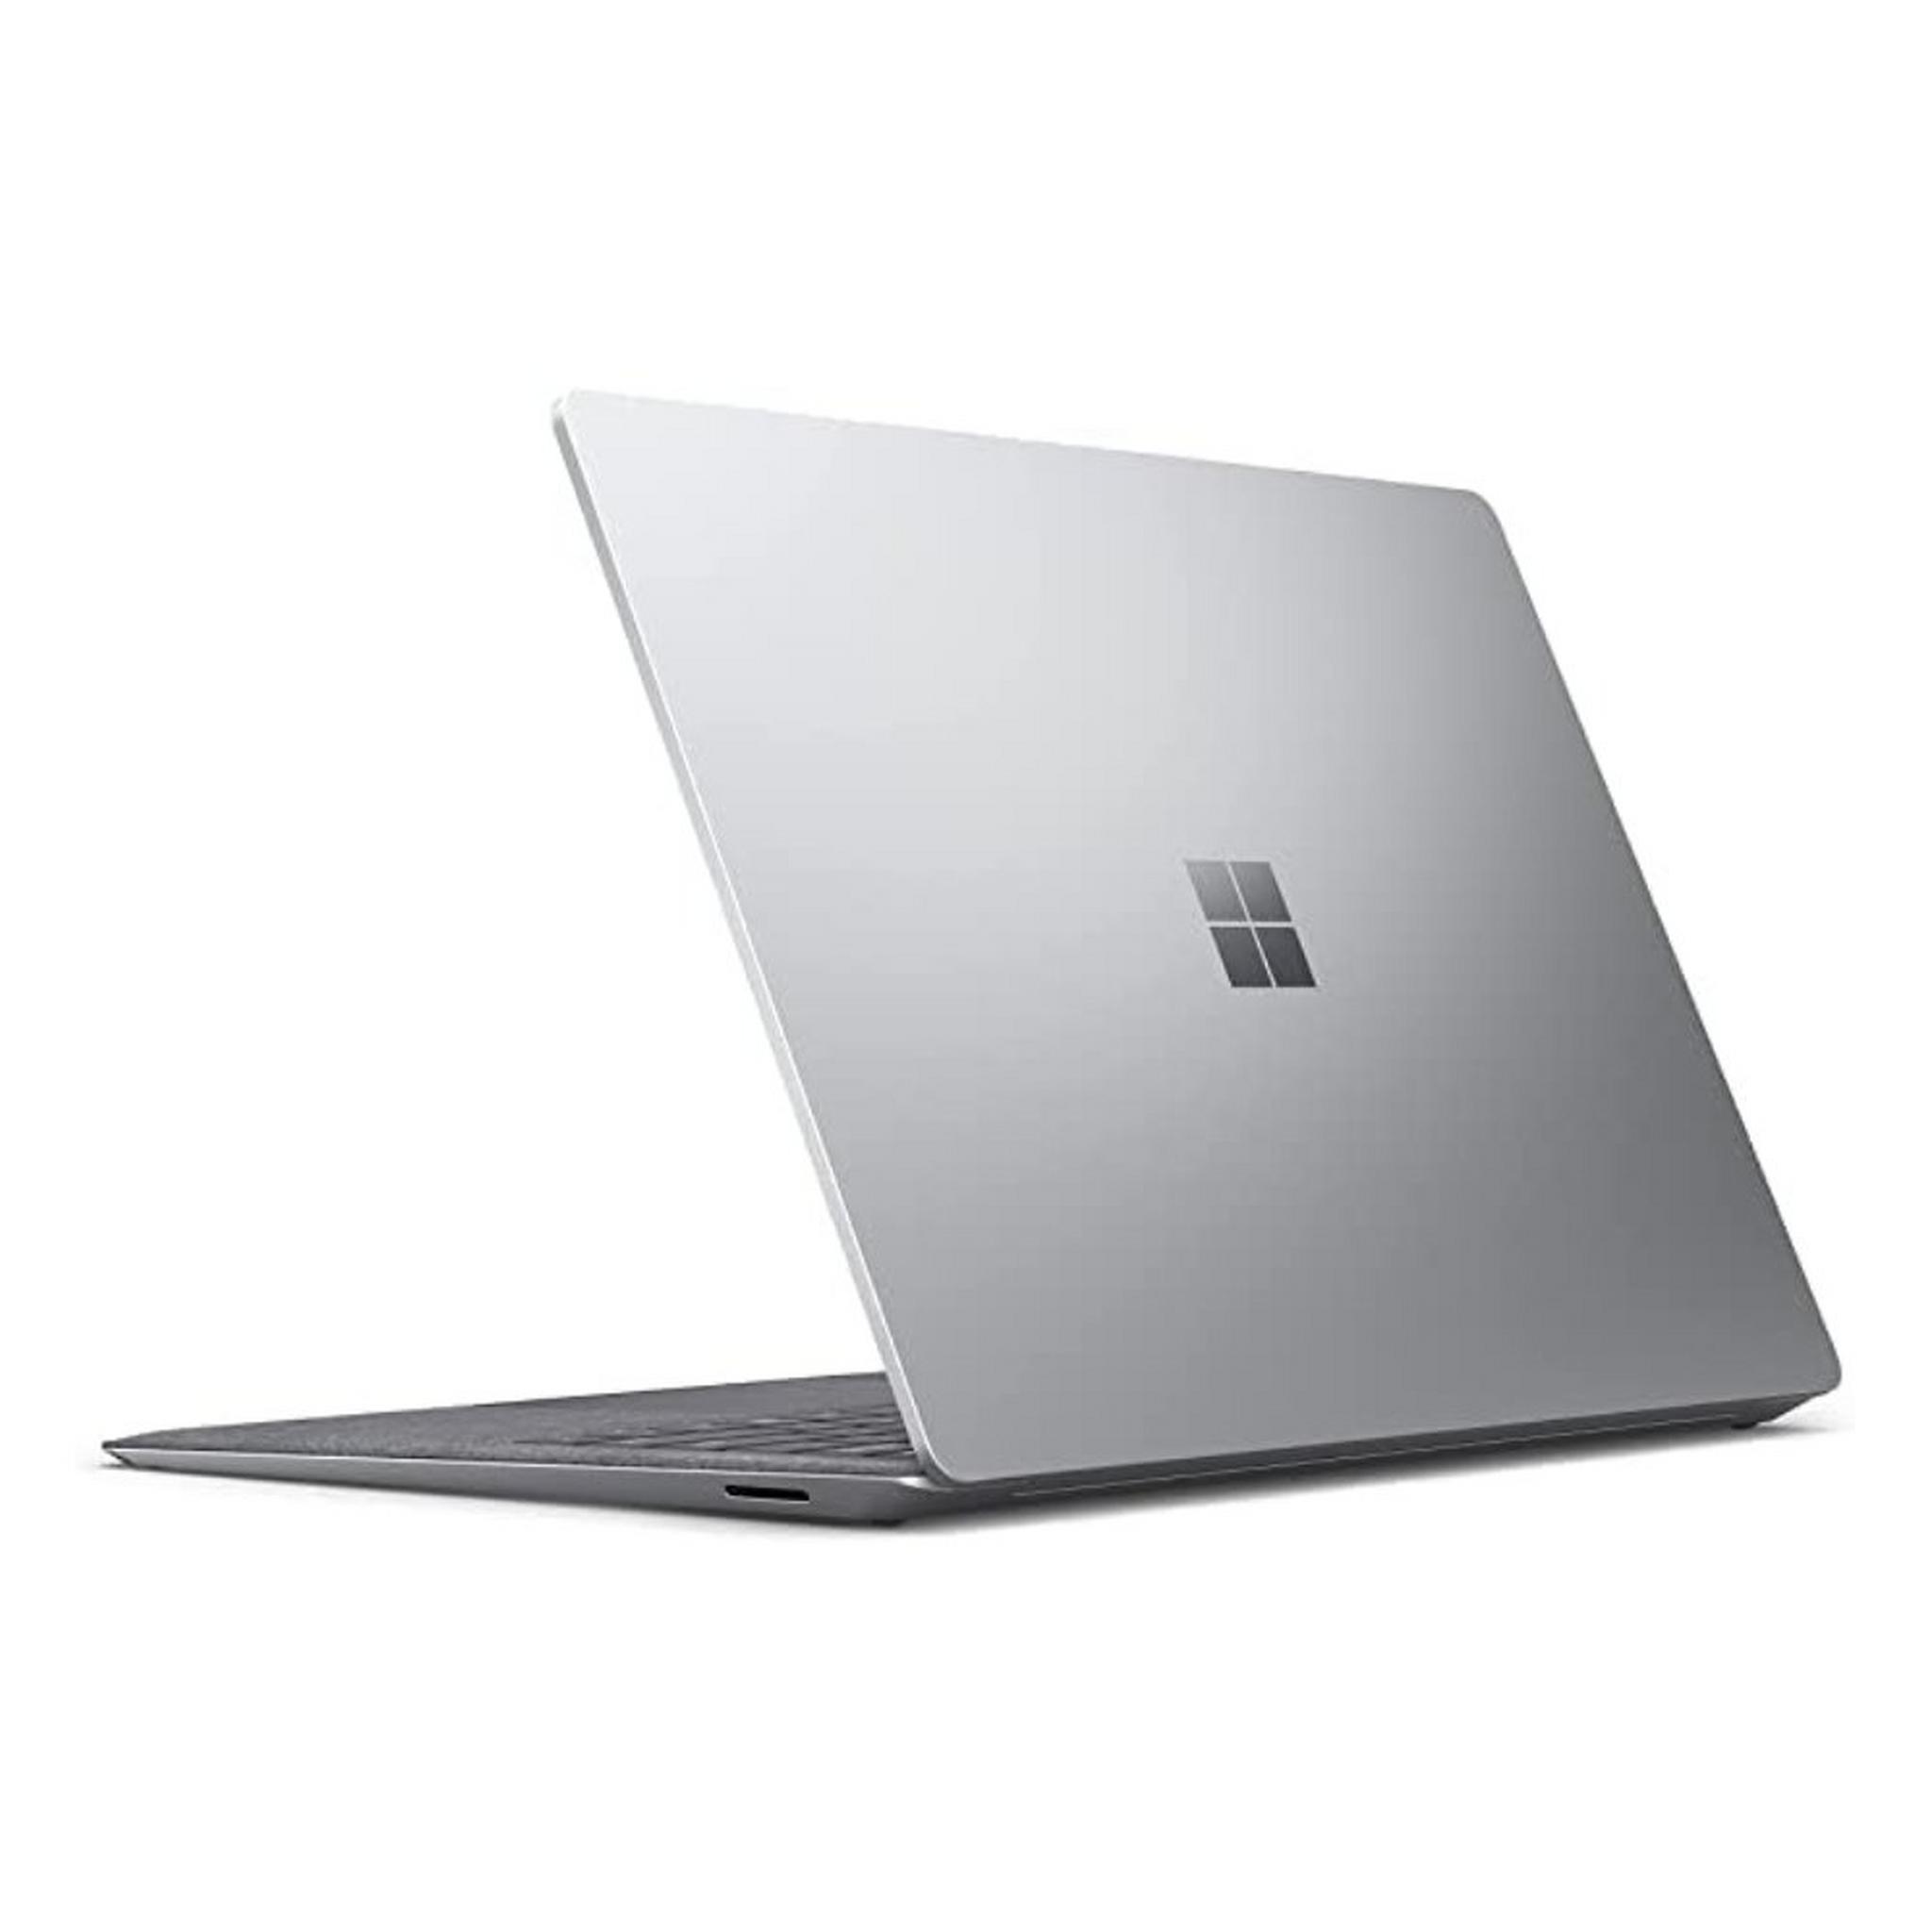 Microsoft Surface Laptop 4, Intel Core i7 11th Gen, 16GB RAM, 512GB SSD, 13.5-inch Touch Screen, Intel graphics Iris Xe, Windows 10, 5EB-00048 - Platinum